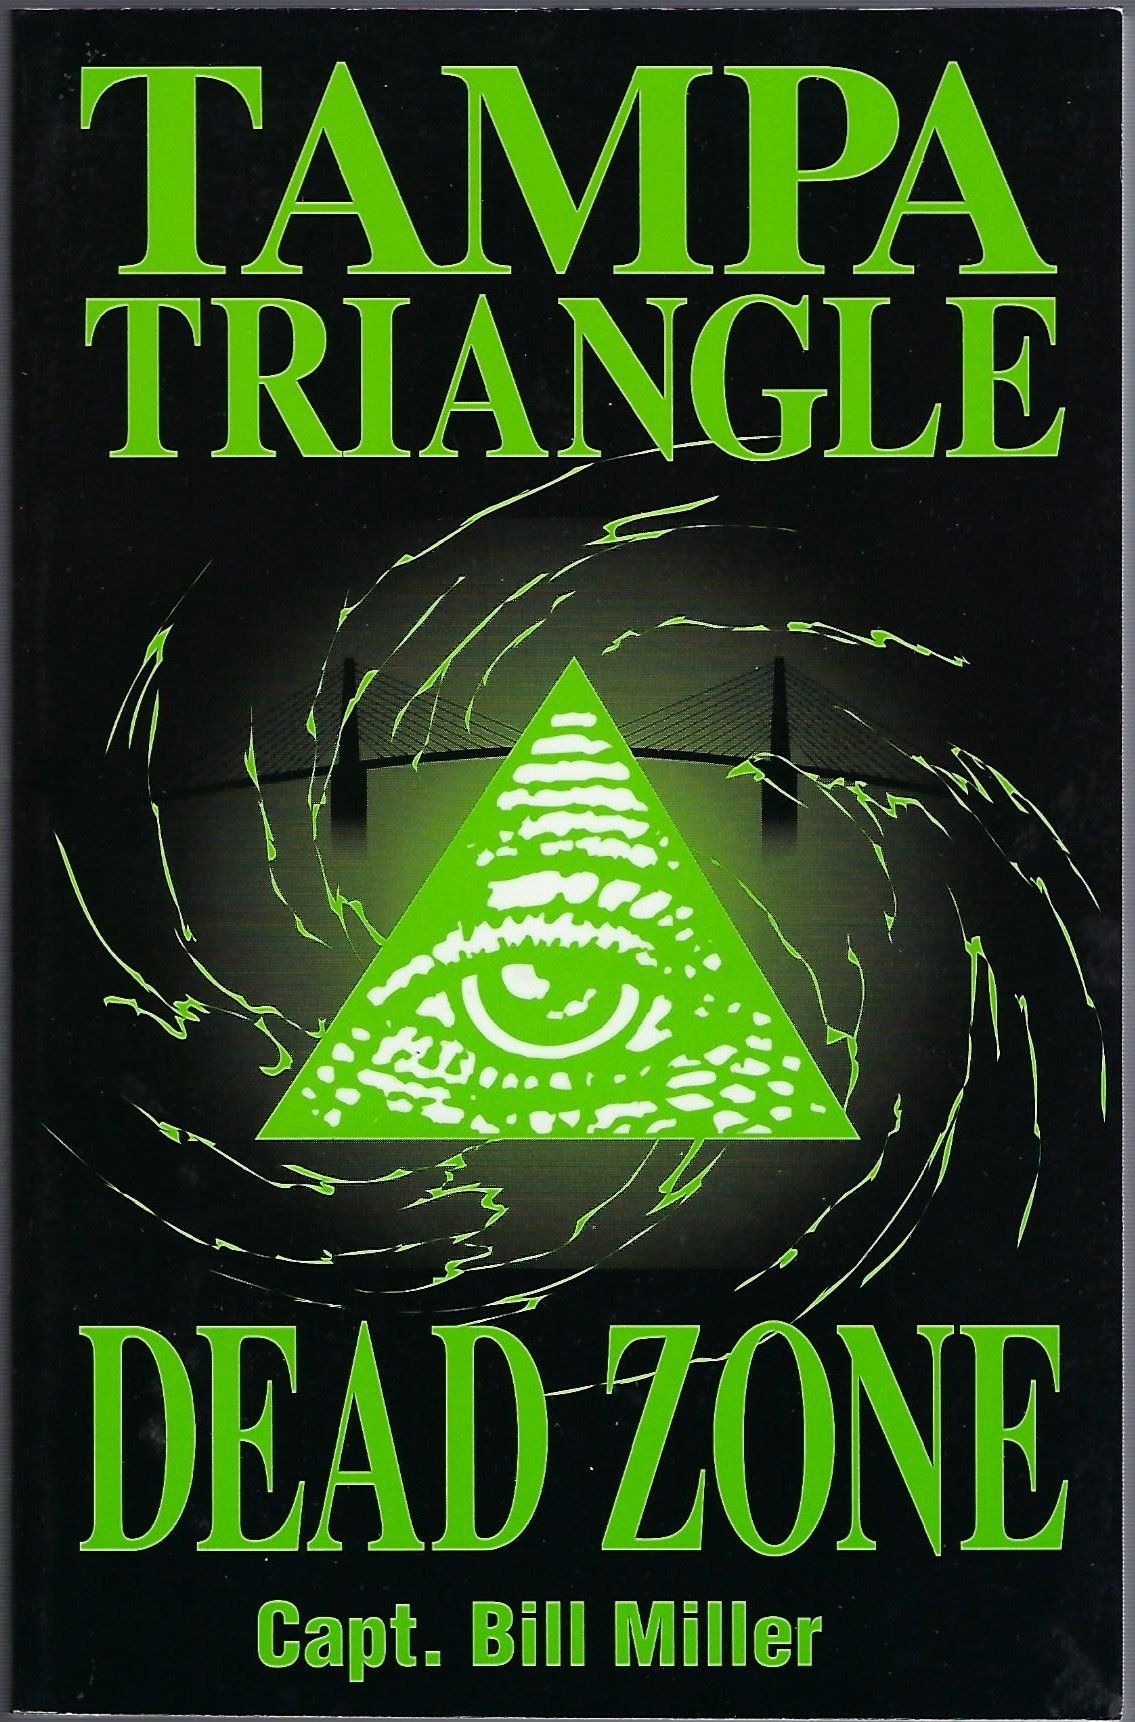 The Tampa Triangle Dead Zone - Picture 1 of 1